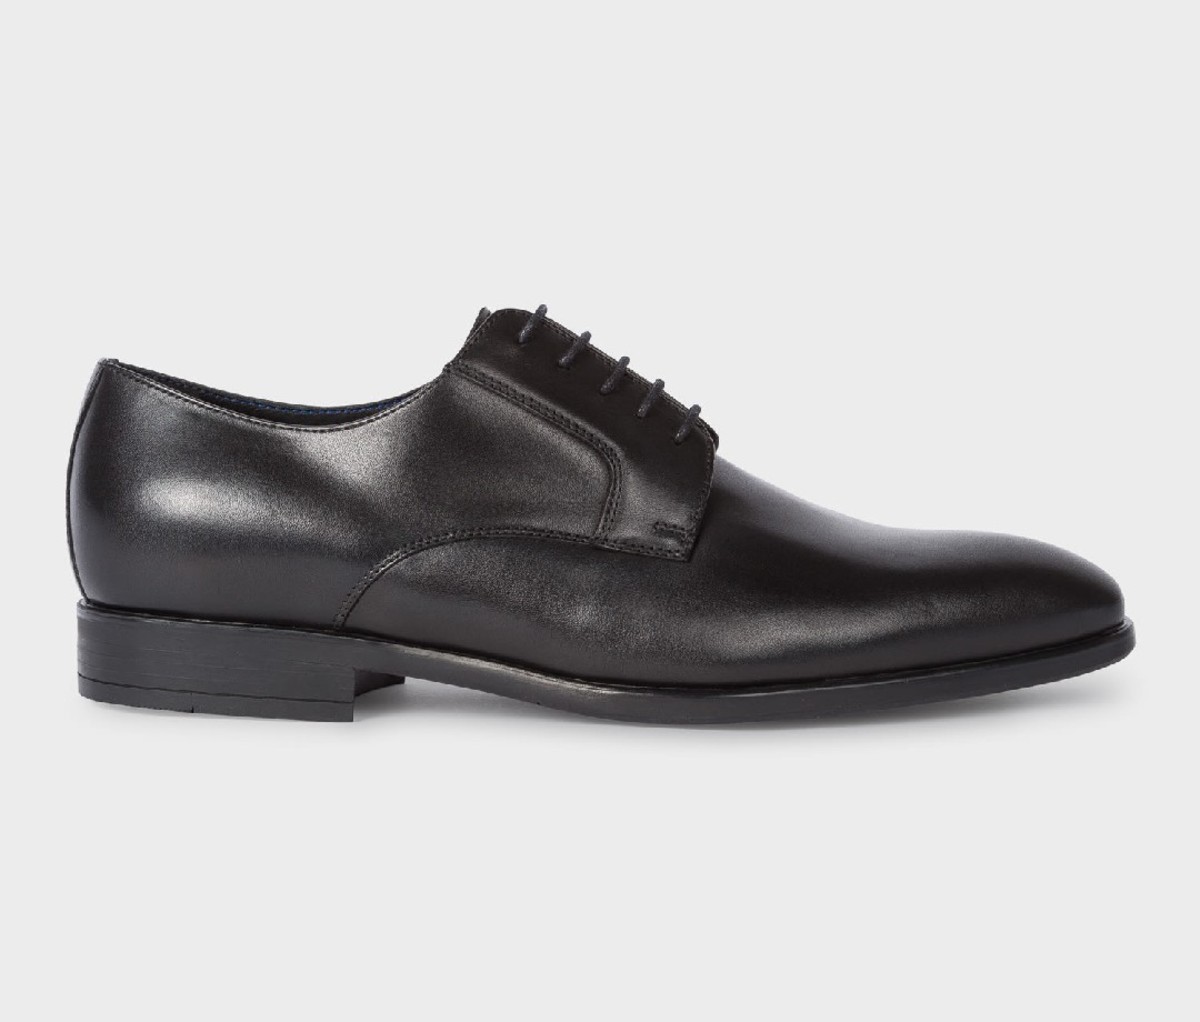 Top 6 Best Leather Shoes For Men (2022) PS by Paul Smith Men’s Black Leather ‘Daniel’ Derby Shoes